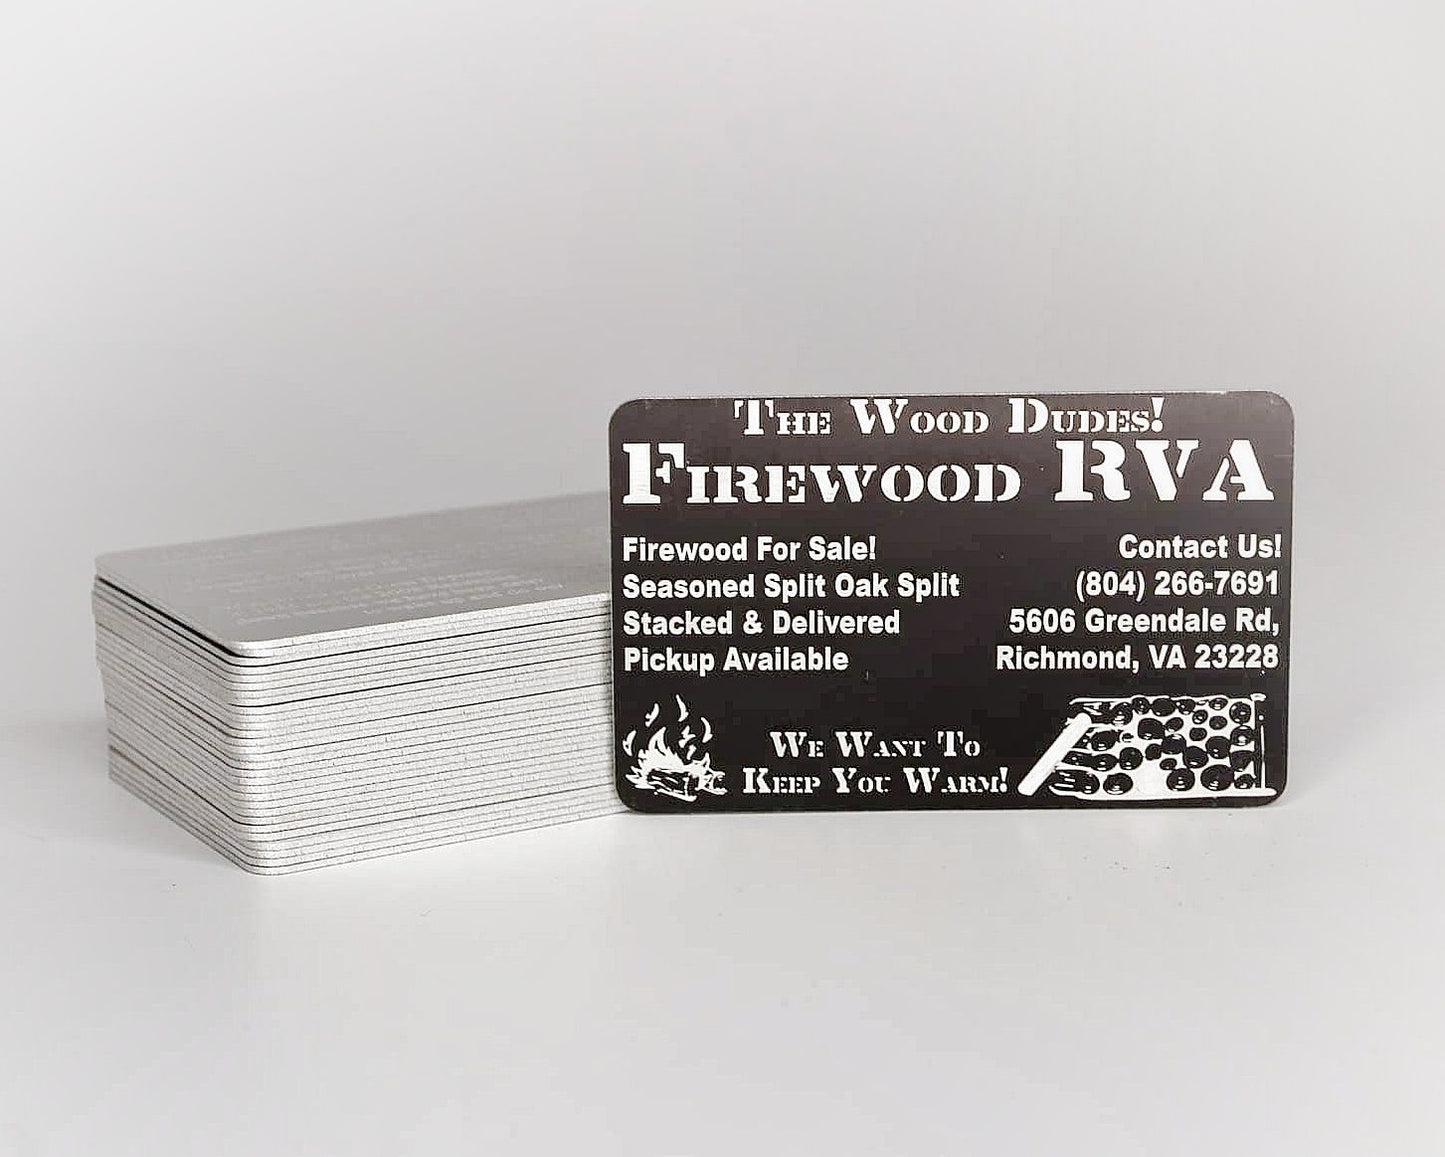 Laser Etched Black Anodized Aluminum Business Cards 50 Pack - BULK DISCOUNT SAVE $18